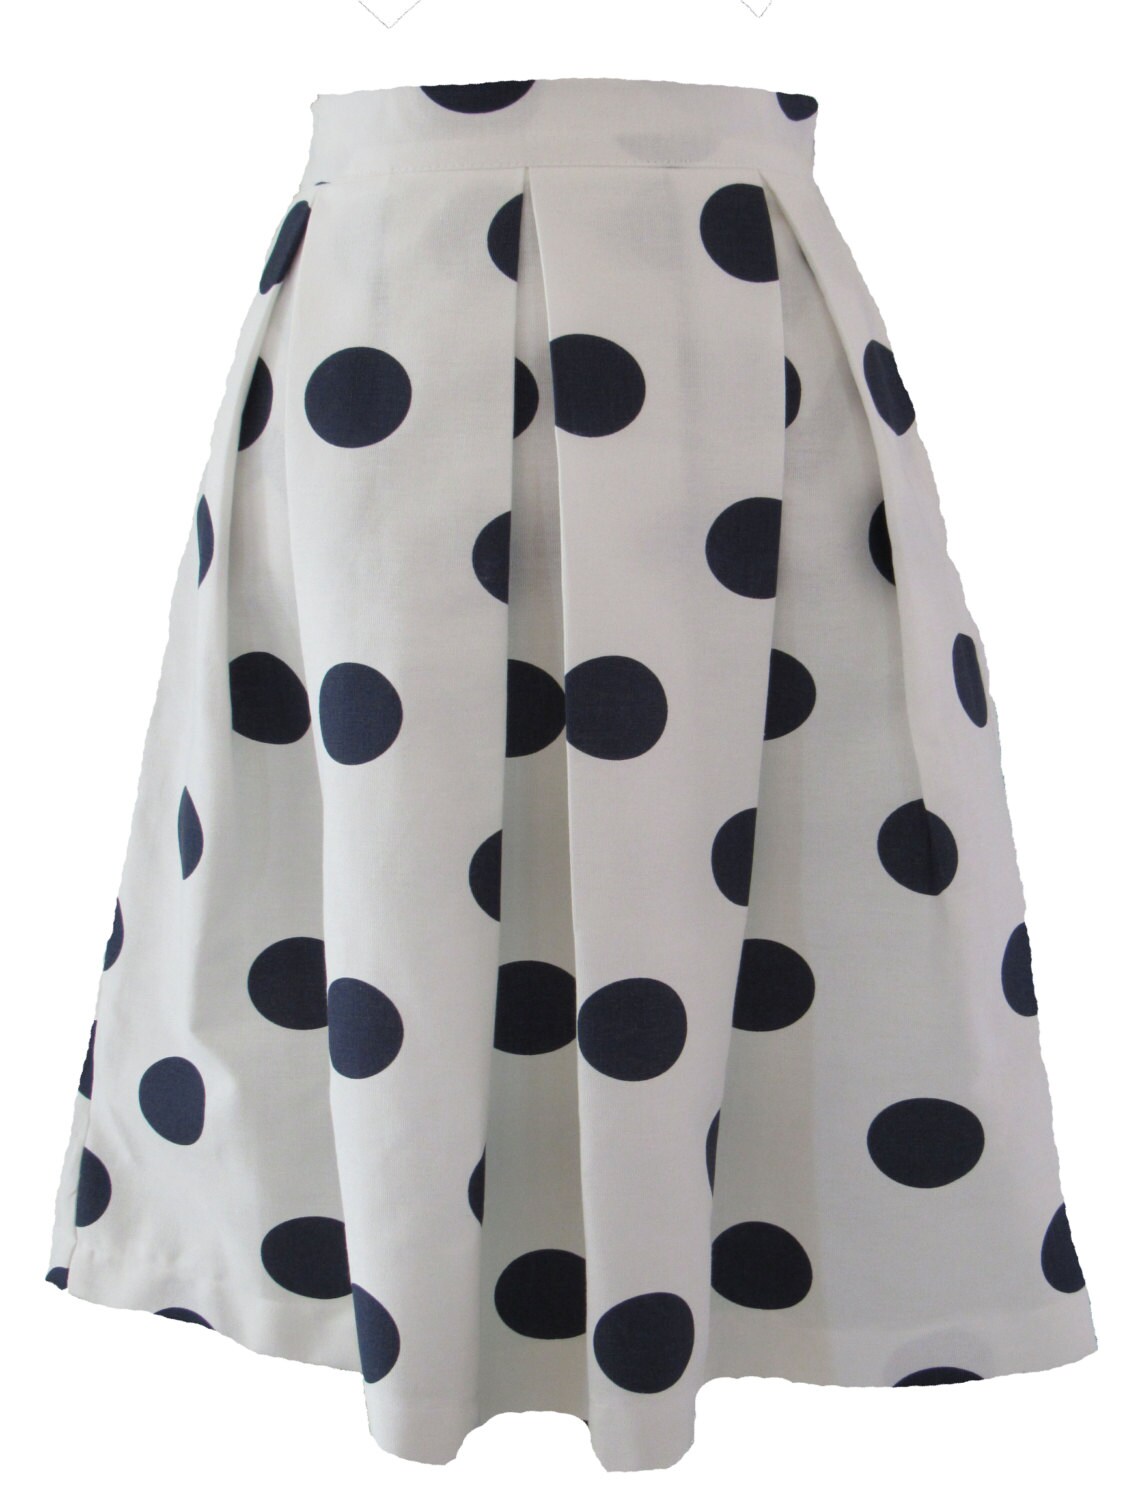 Navy and White Polka Dot Skirt Pleated Midi with full | Etsy